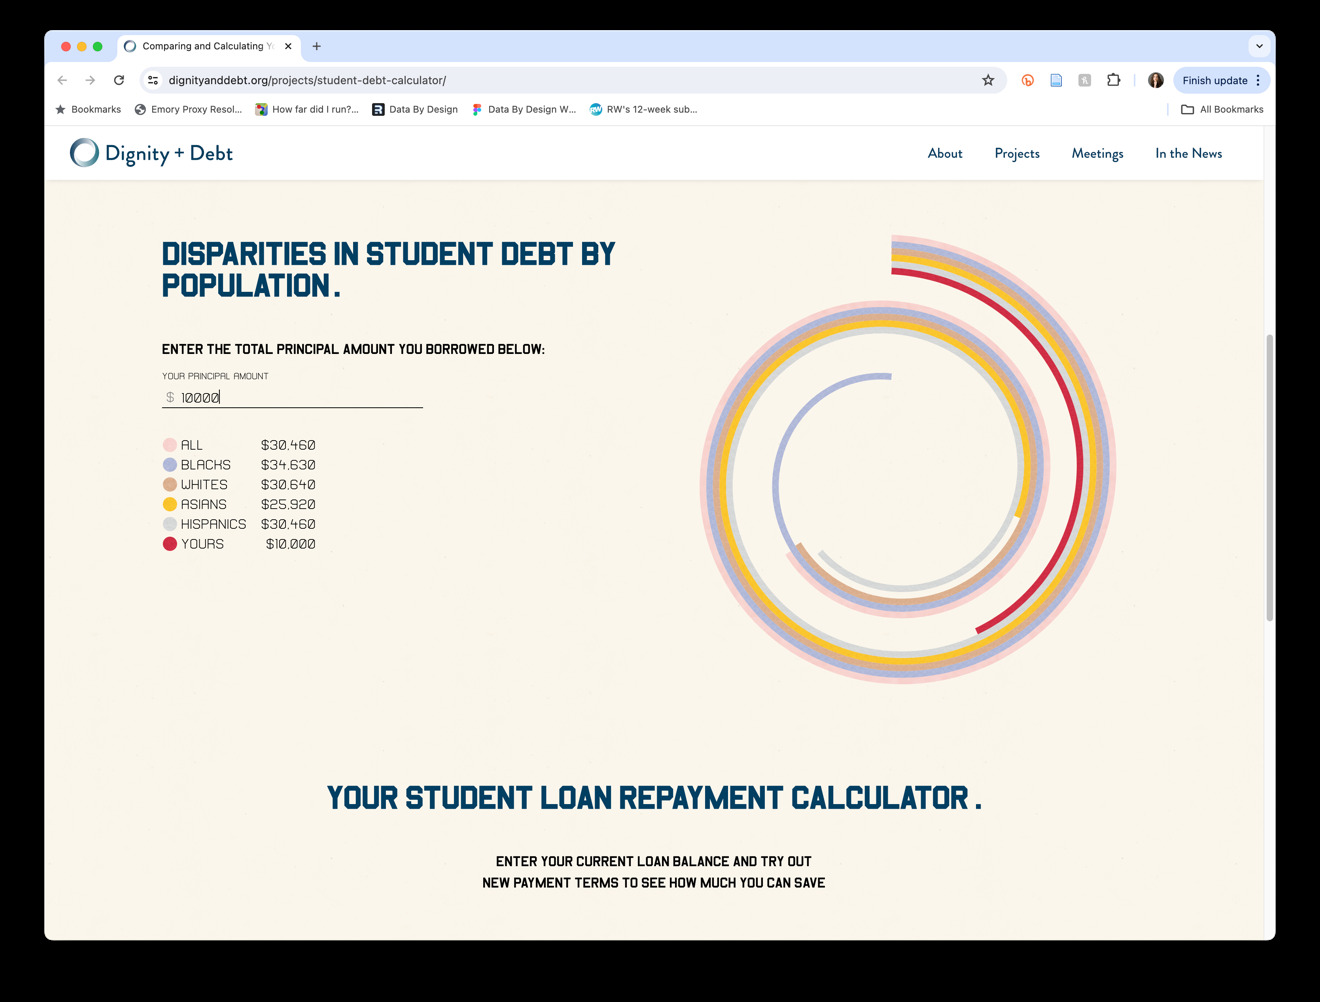 Screenshot of the Dignity + Debt student debt calculator